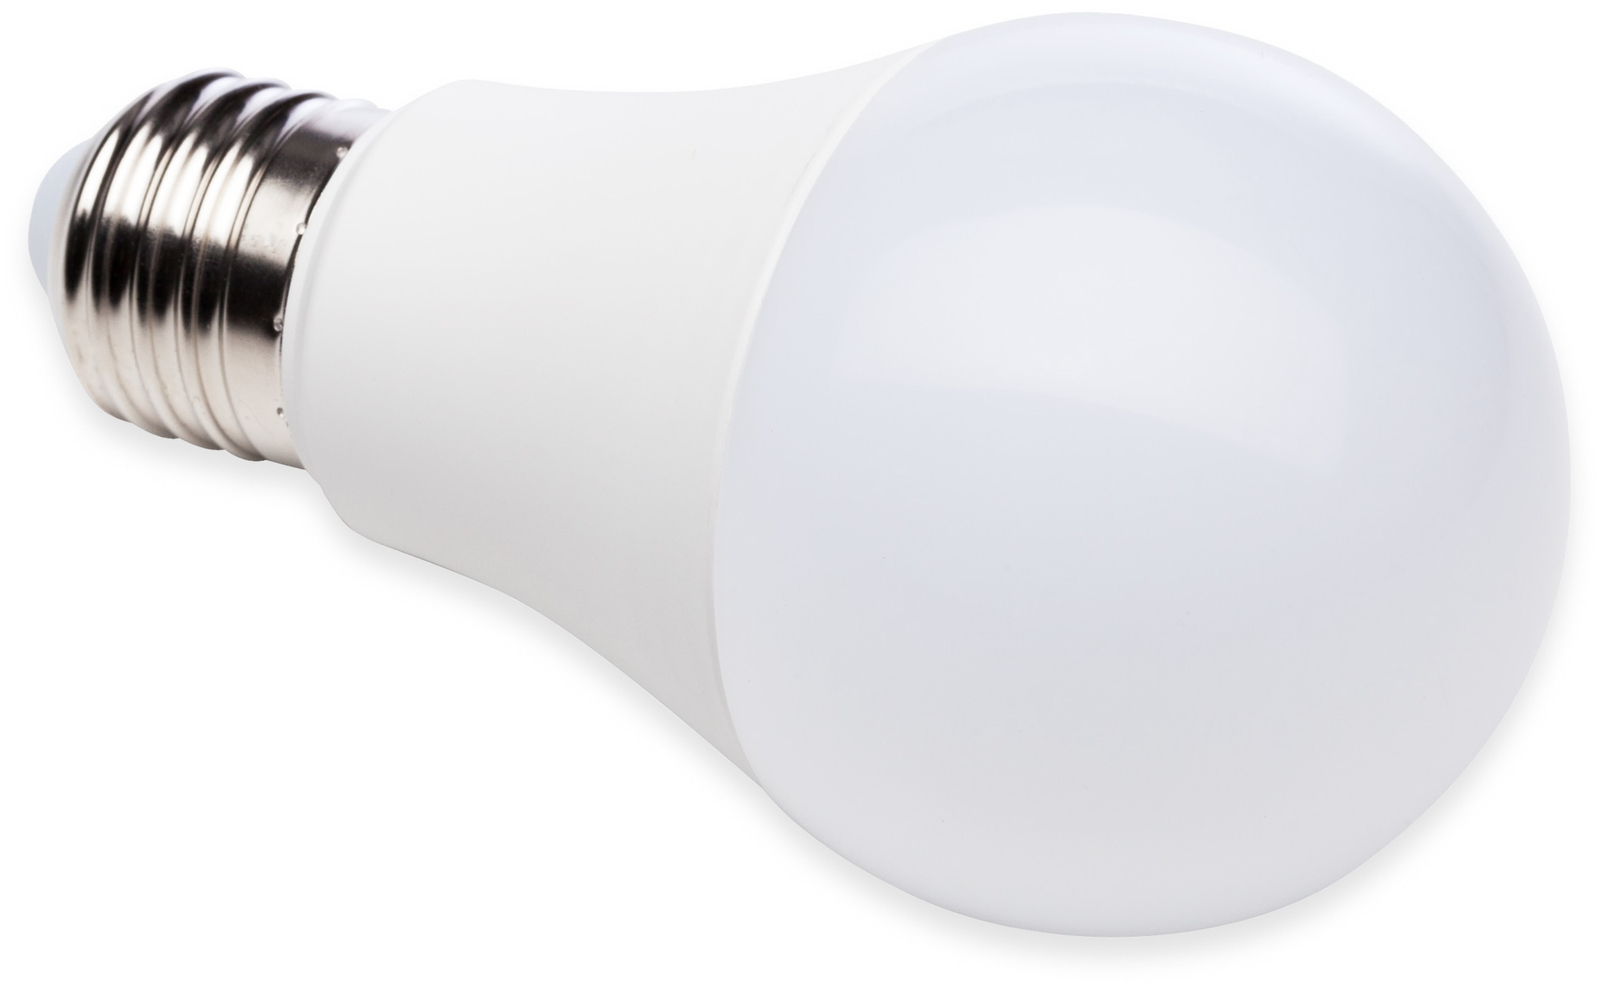 LED Lampe Birnenform, MÜLLER LICHT, 400263, 3+1 Set, E27, 6W